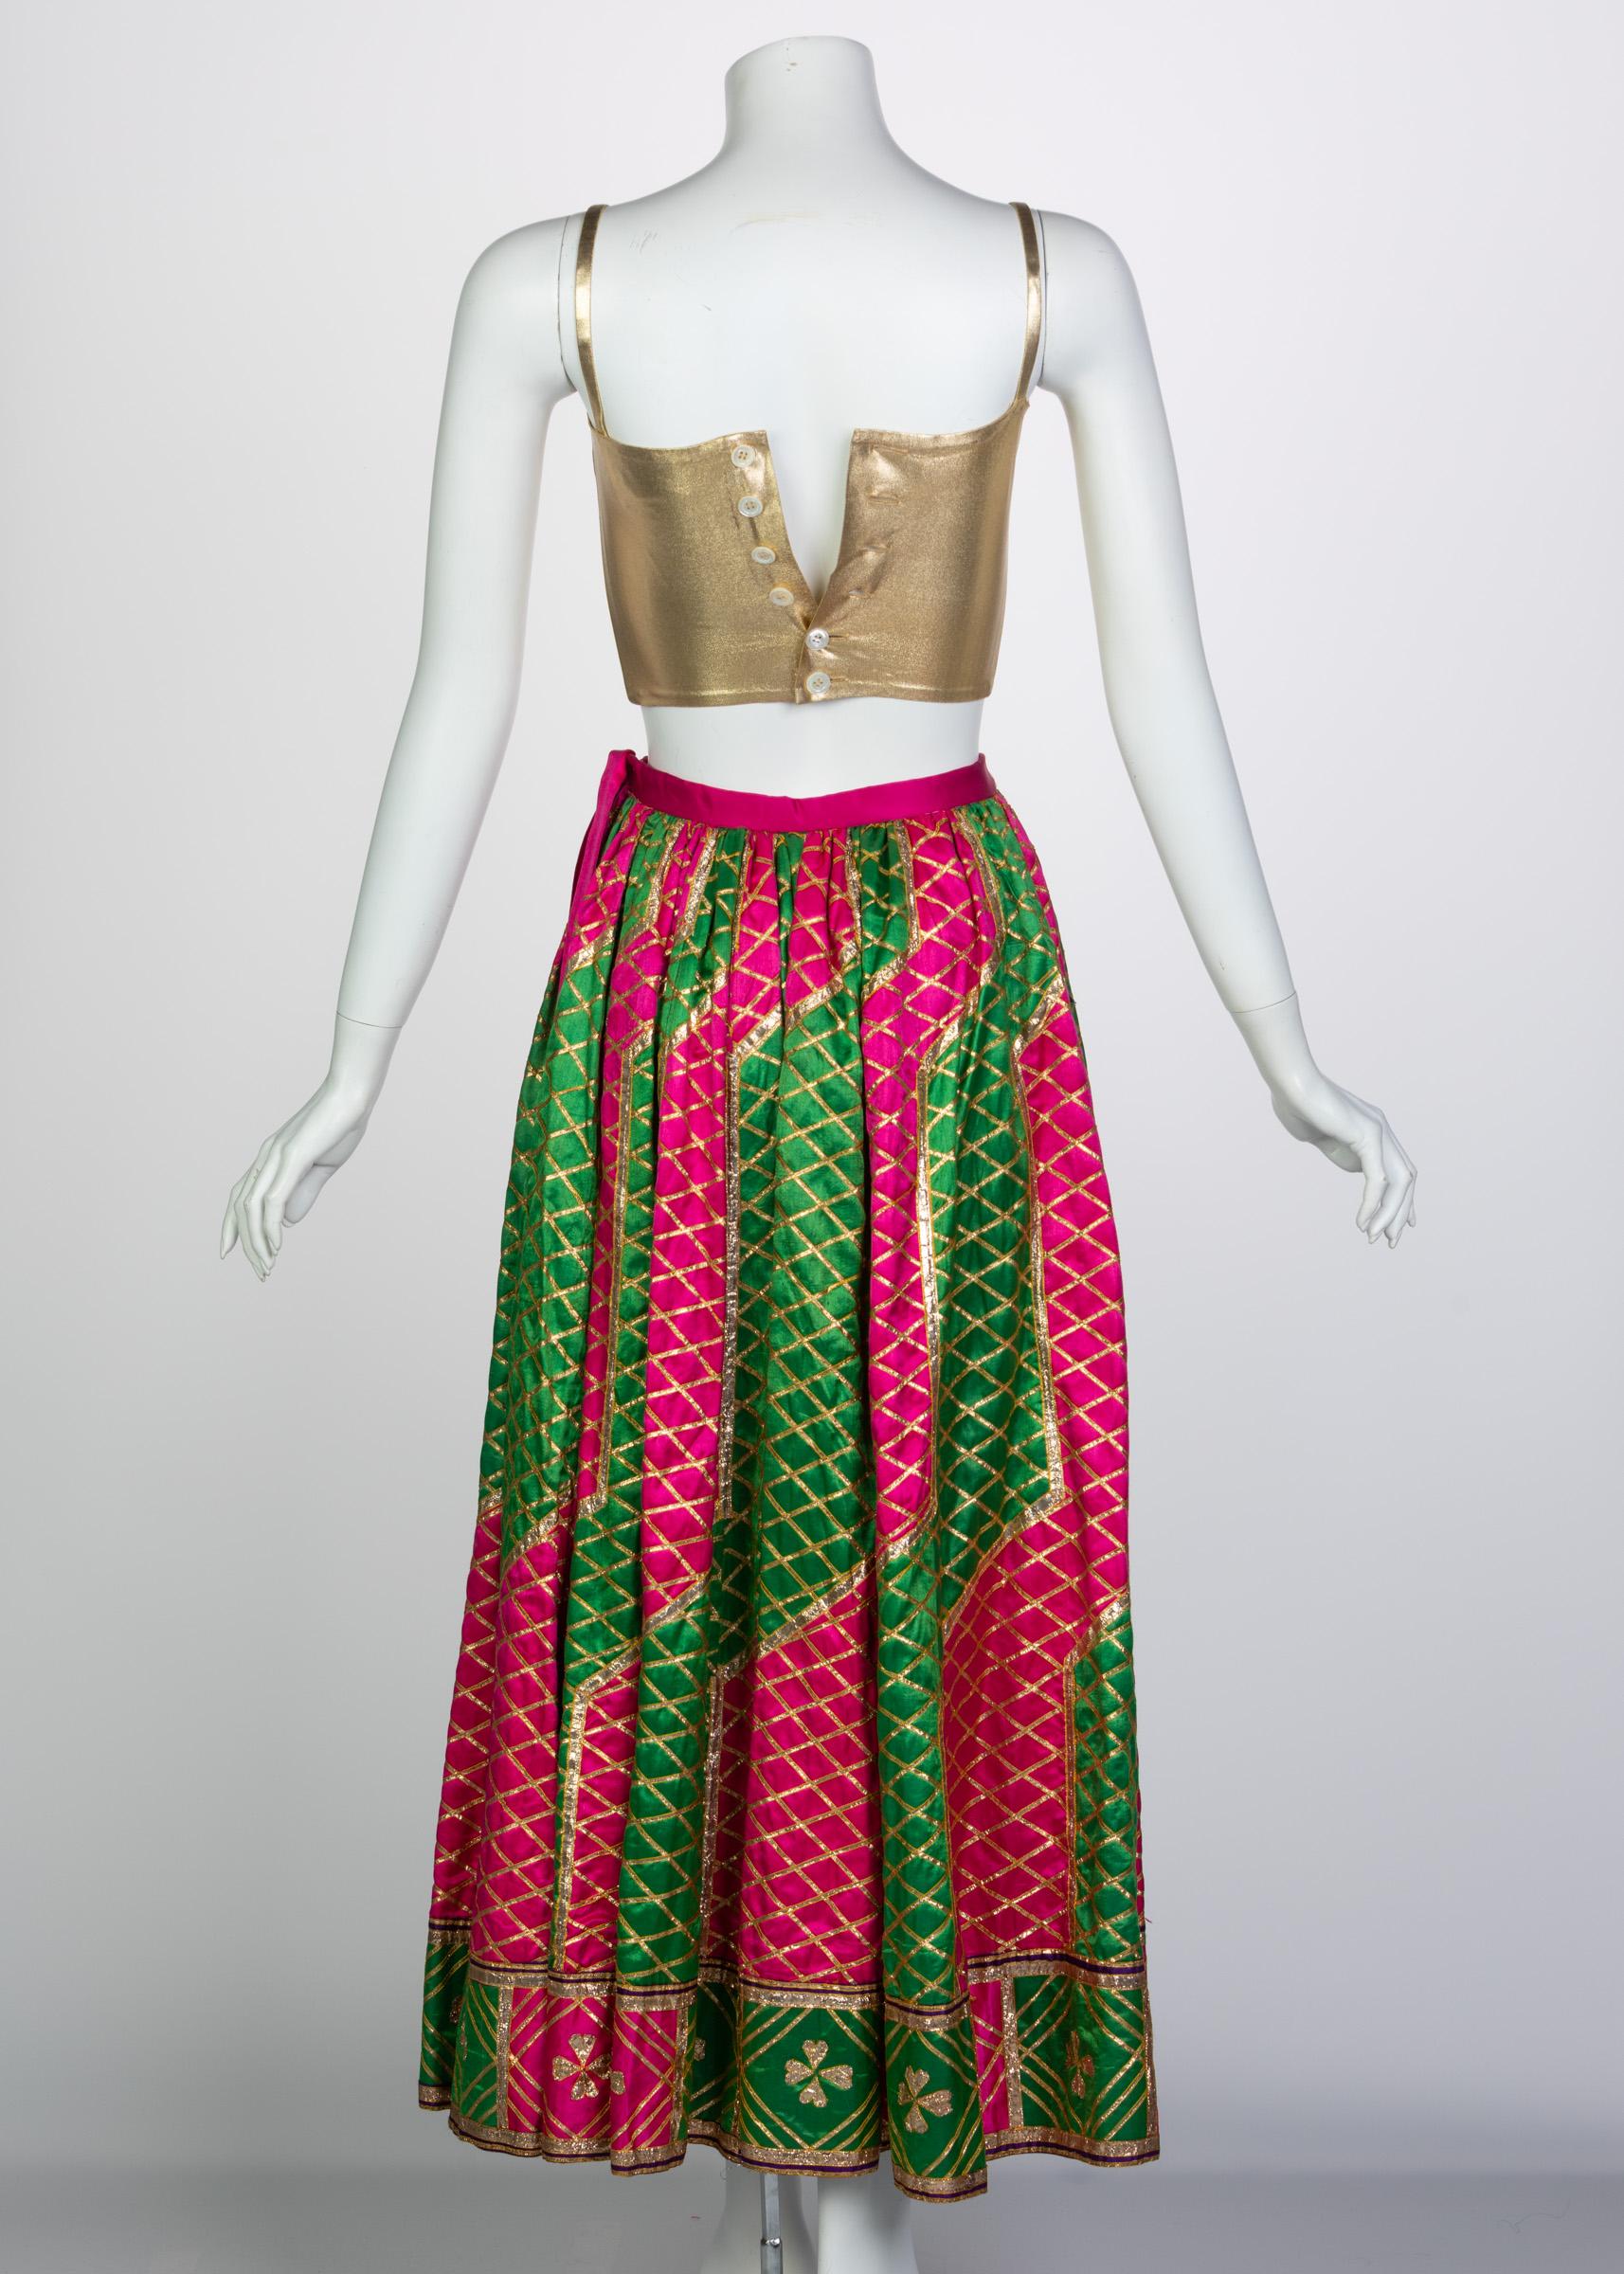 Lanvin Haute Couture Gold Lame Top & Green Pink Peasant Skirt Ensemble, 1977 2